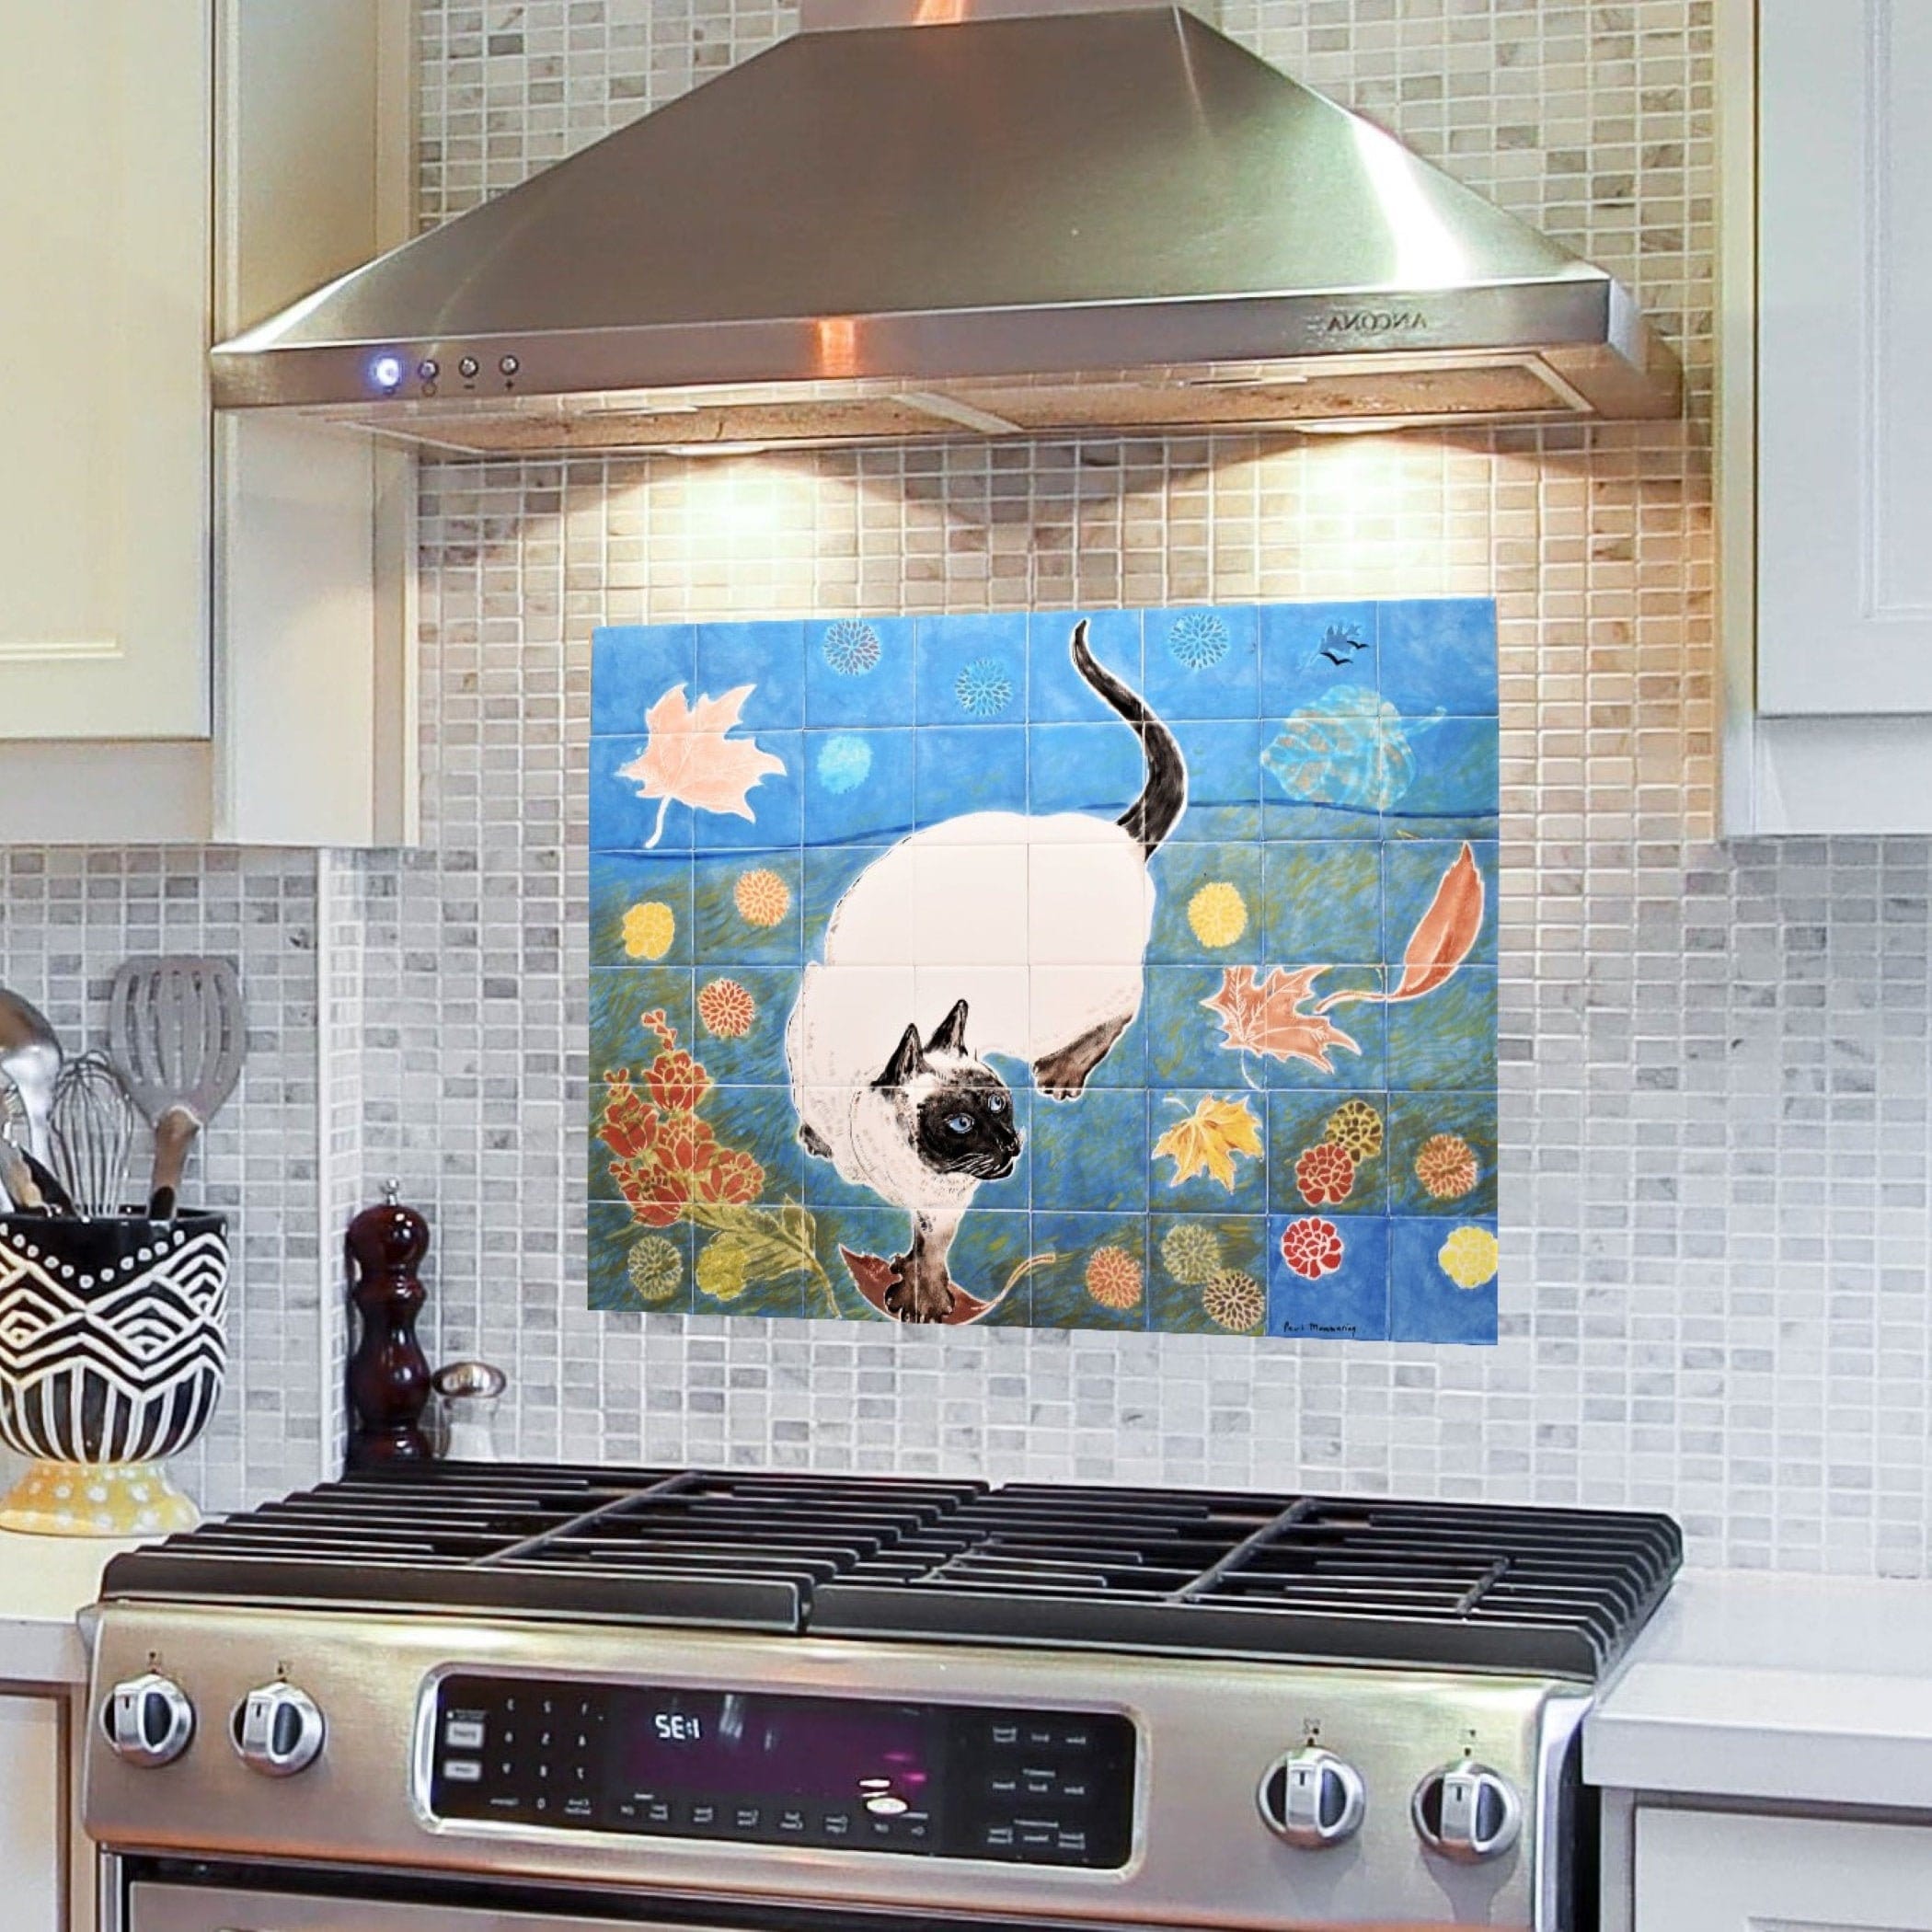 Kitchen Backsplash Mural Images – Kitchen Info